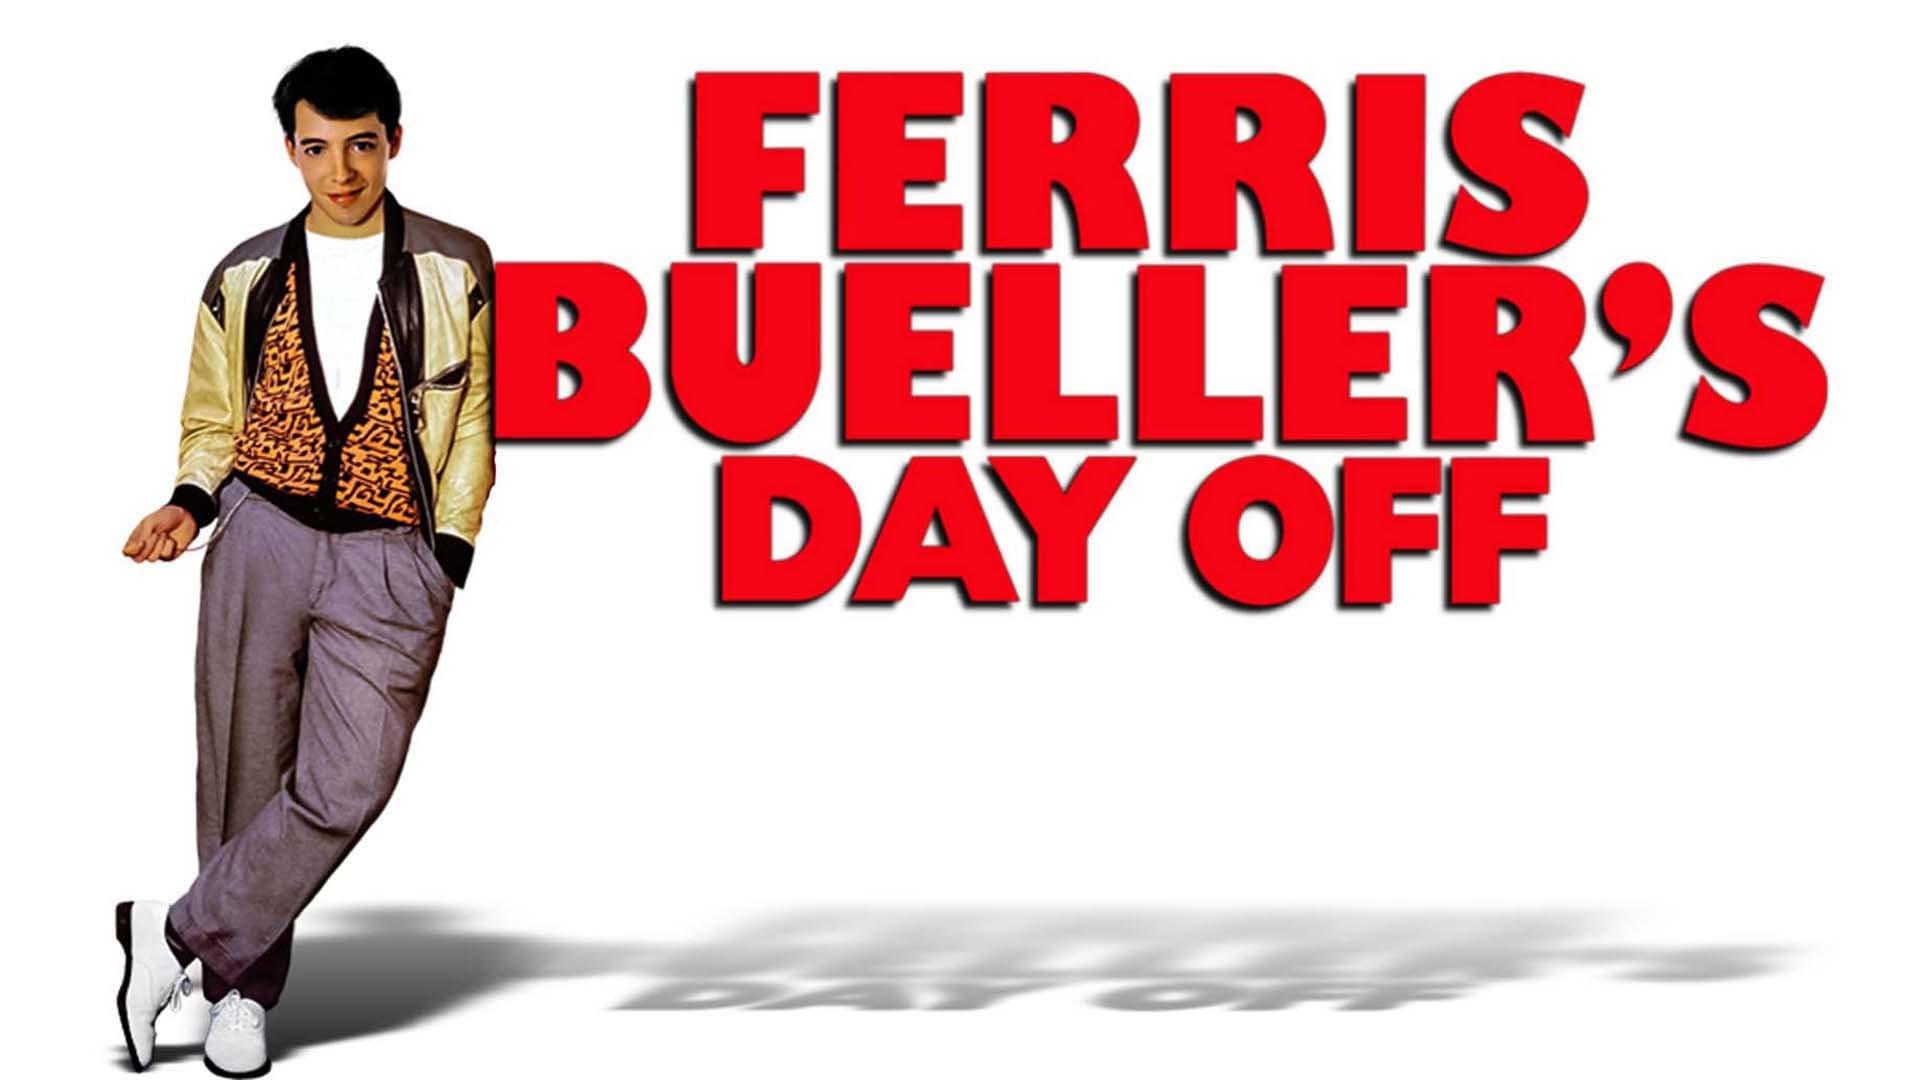 Ferris Bueller's Day Off Wallpaper High Quality